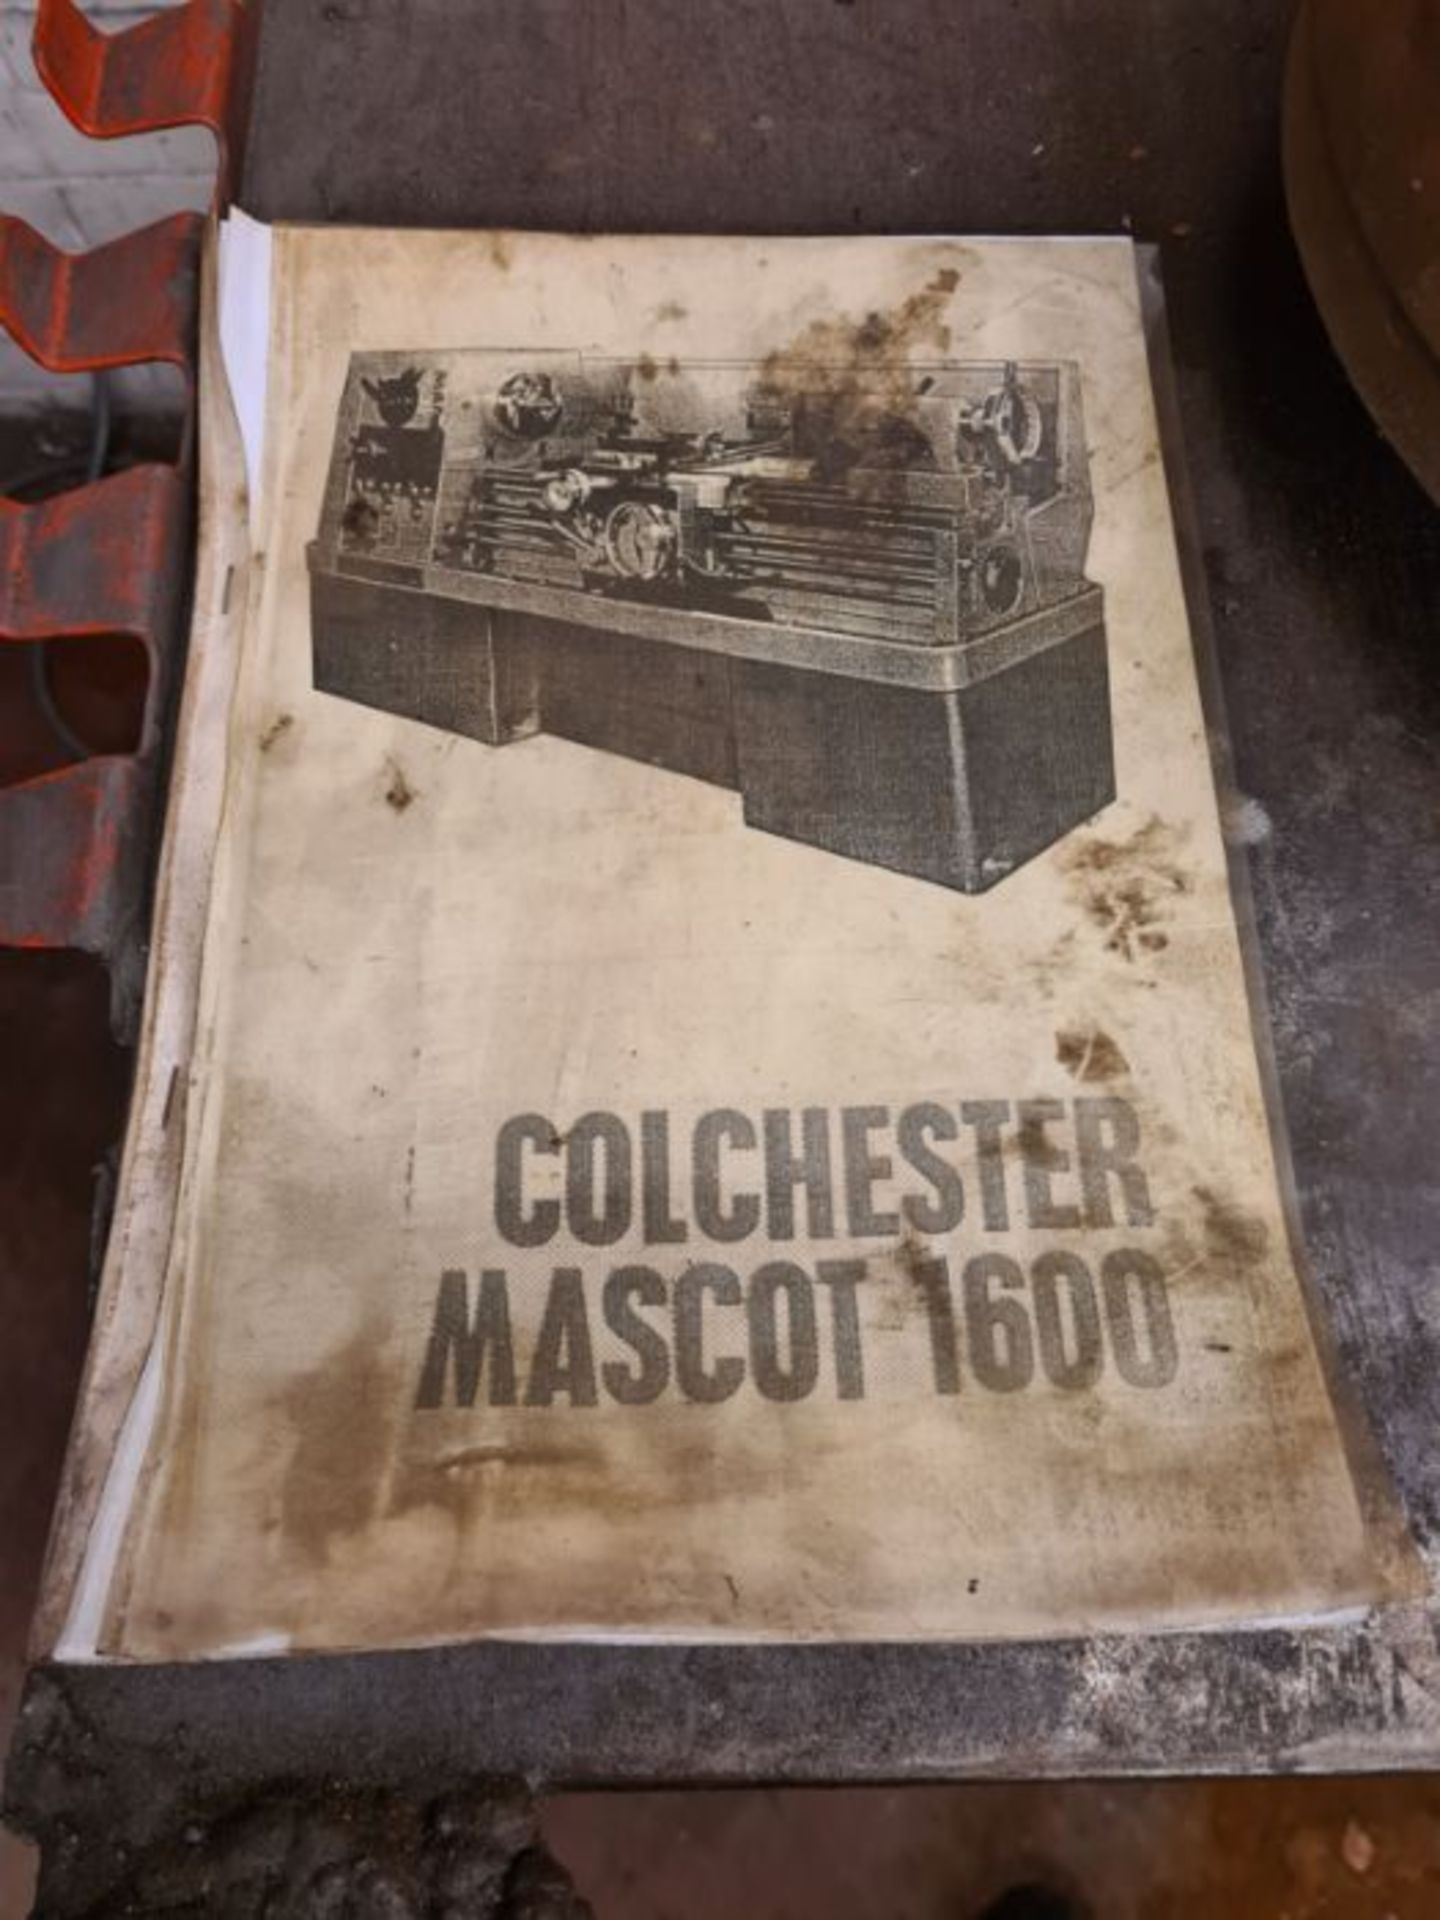 Colchester Mascot 1600 lathe - Image 6 of 19